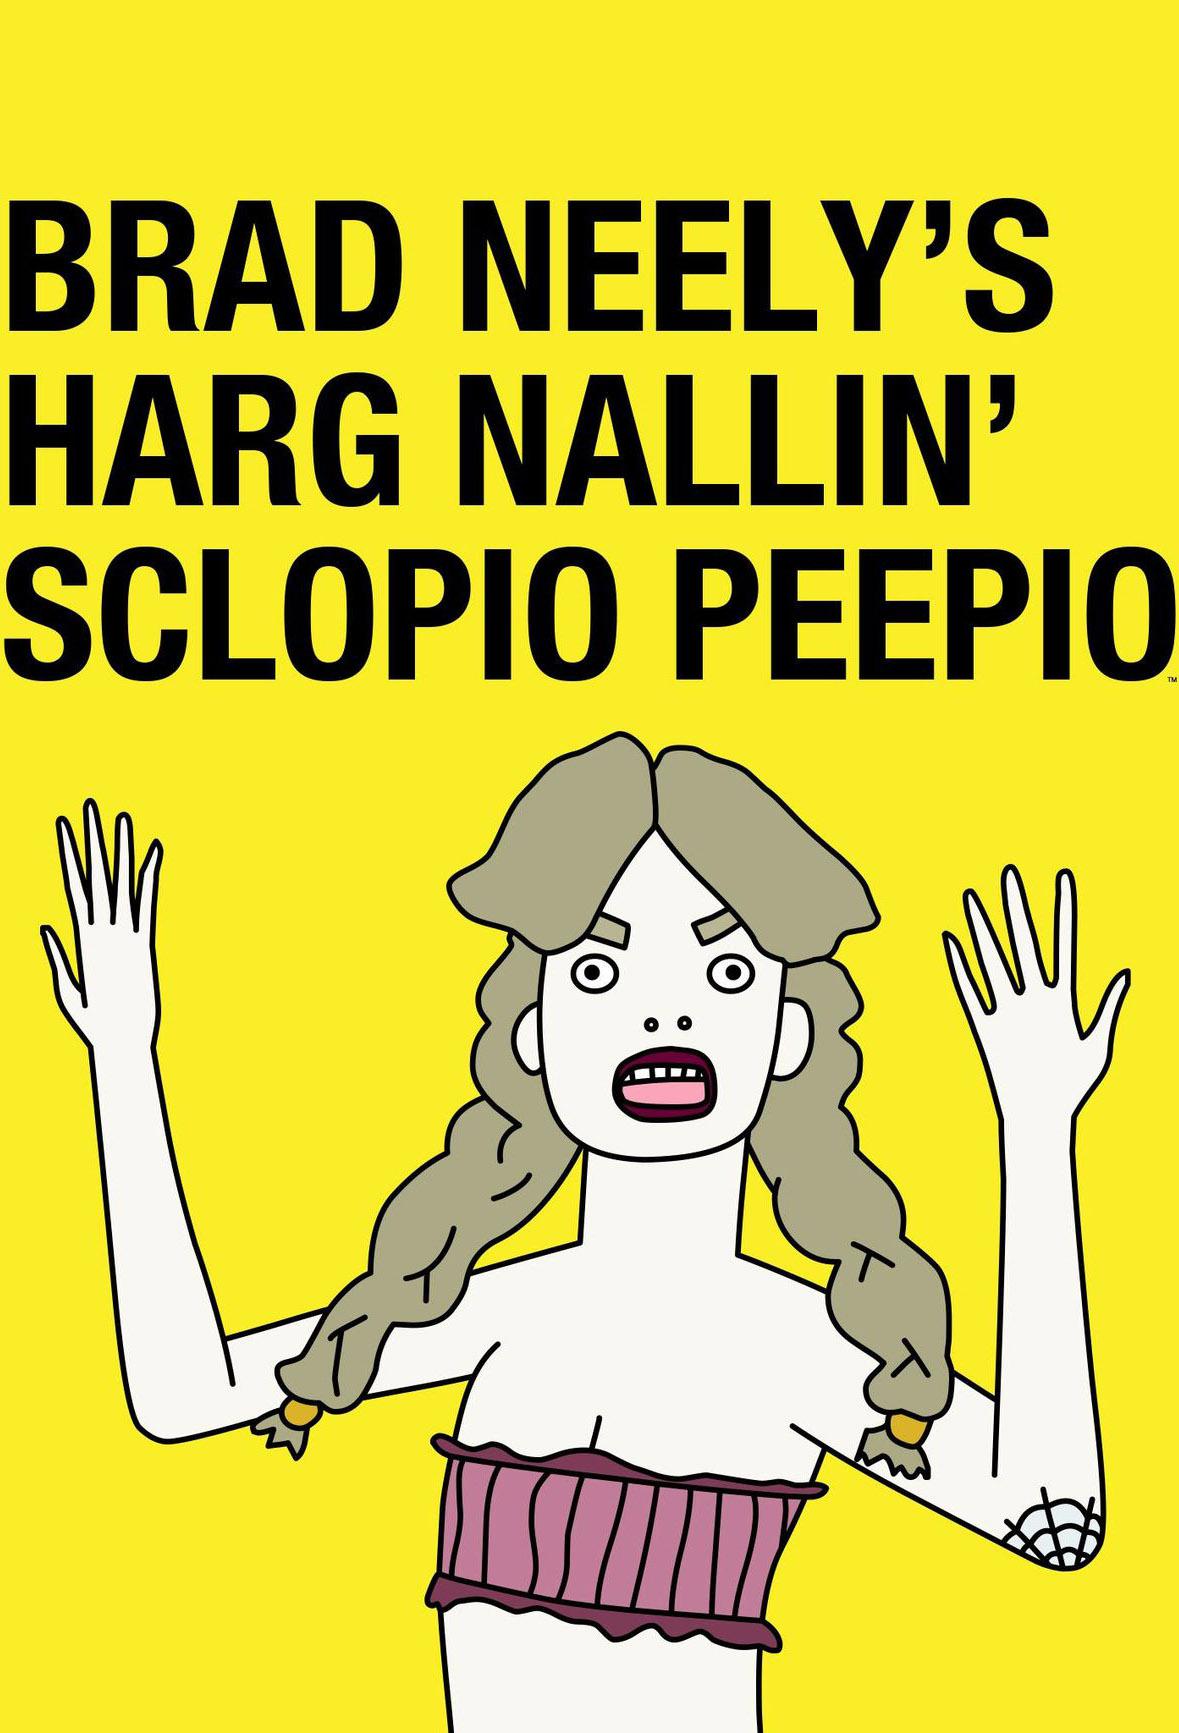 TV ratings for Brad Neely's Harg Nallin' Sclopio Peepio in the United States. Adult Swim TV series